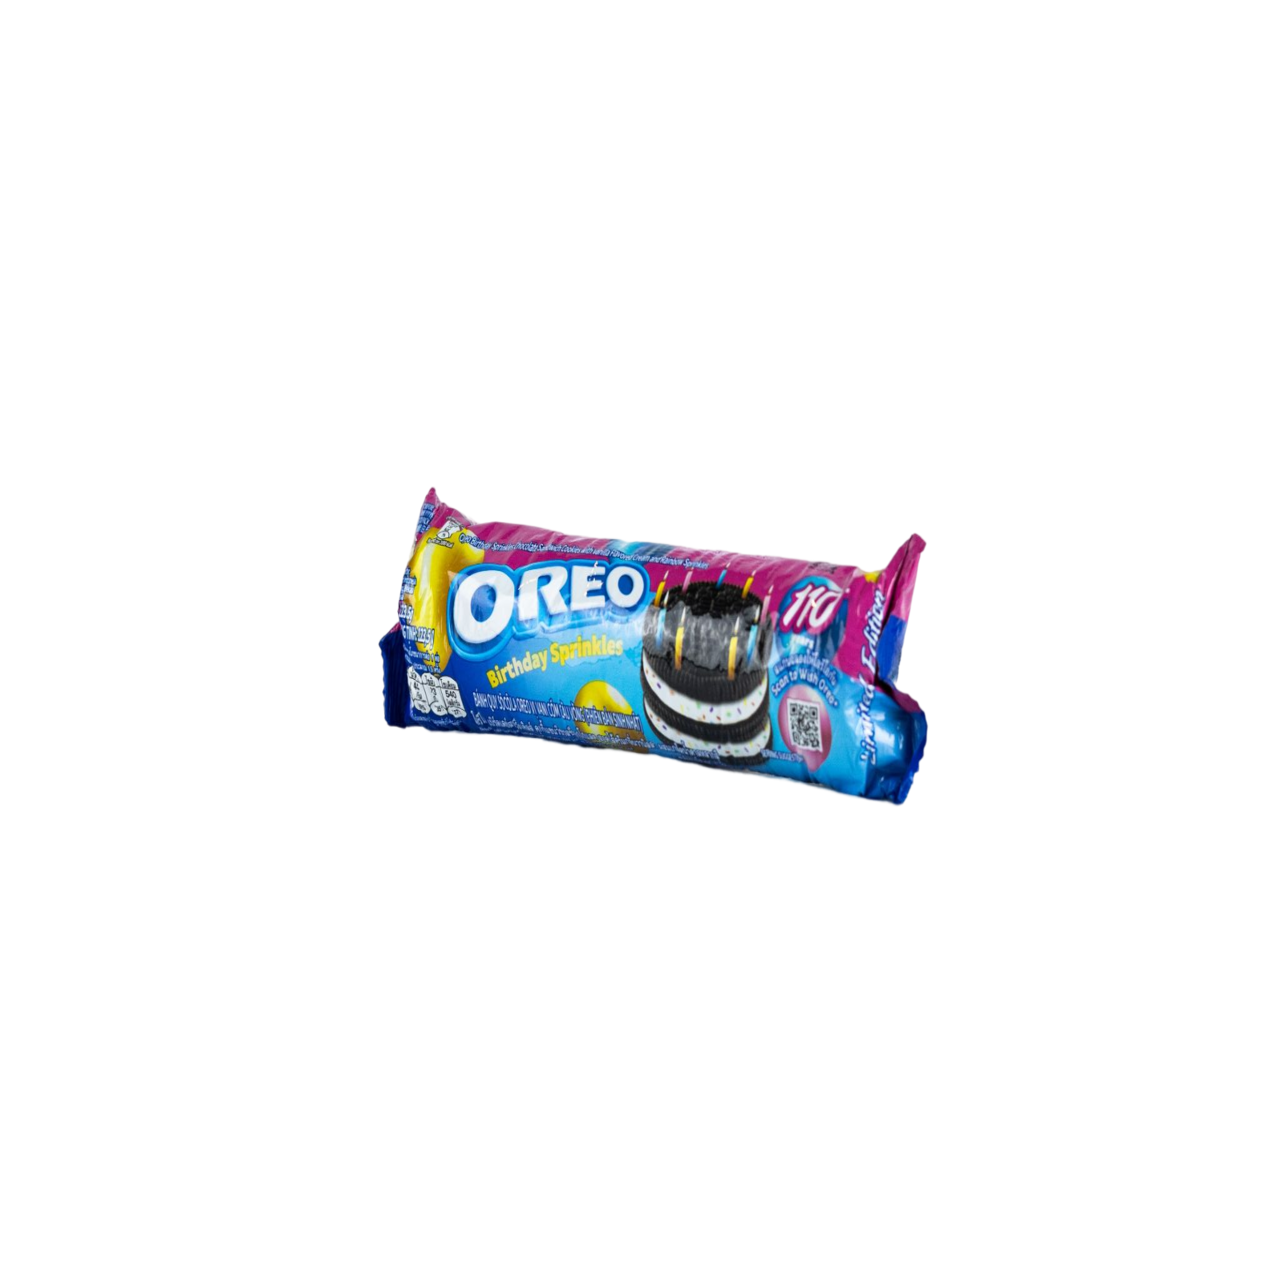 Oreo - Limited Edition Oreo Birthday Sprinkles